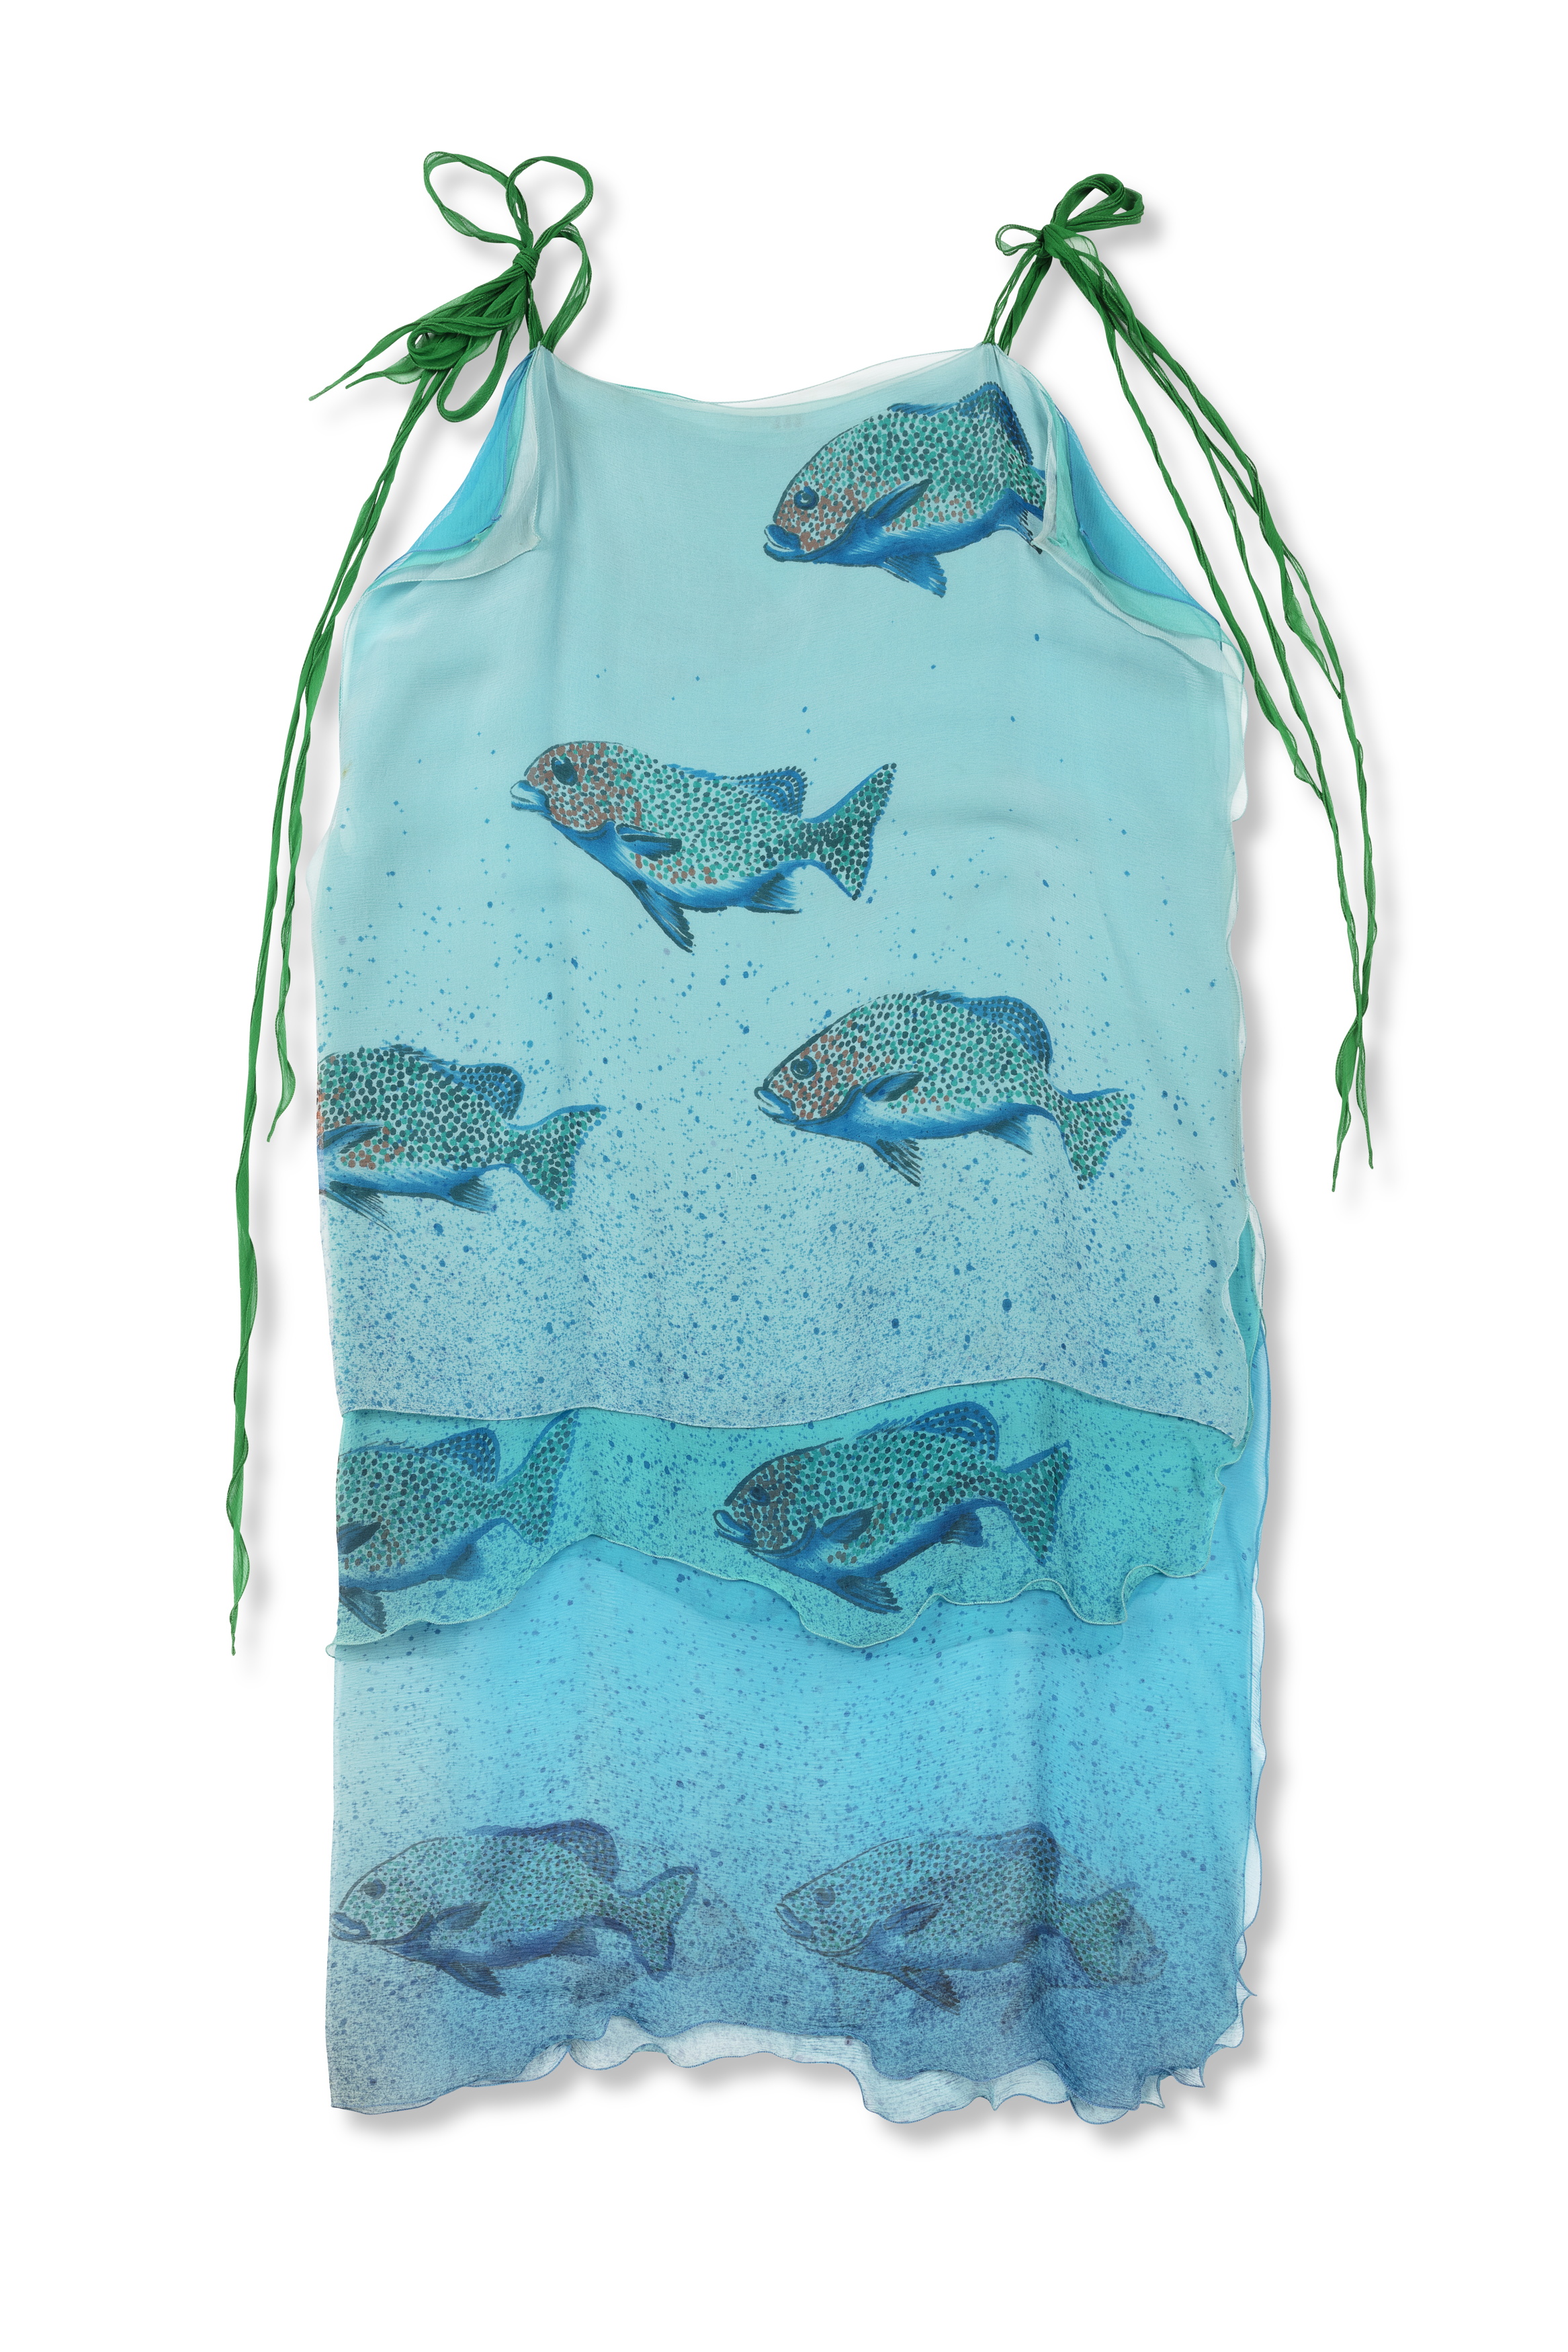 'Fish' dress by Linda Jackson